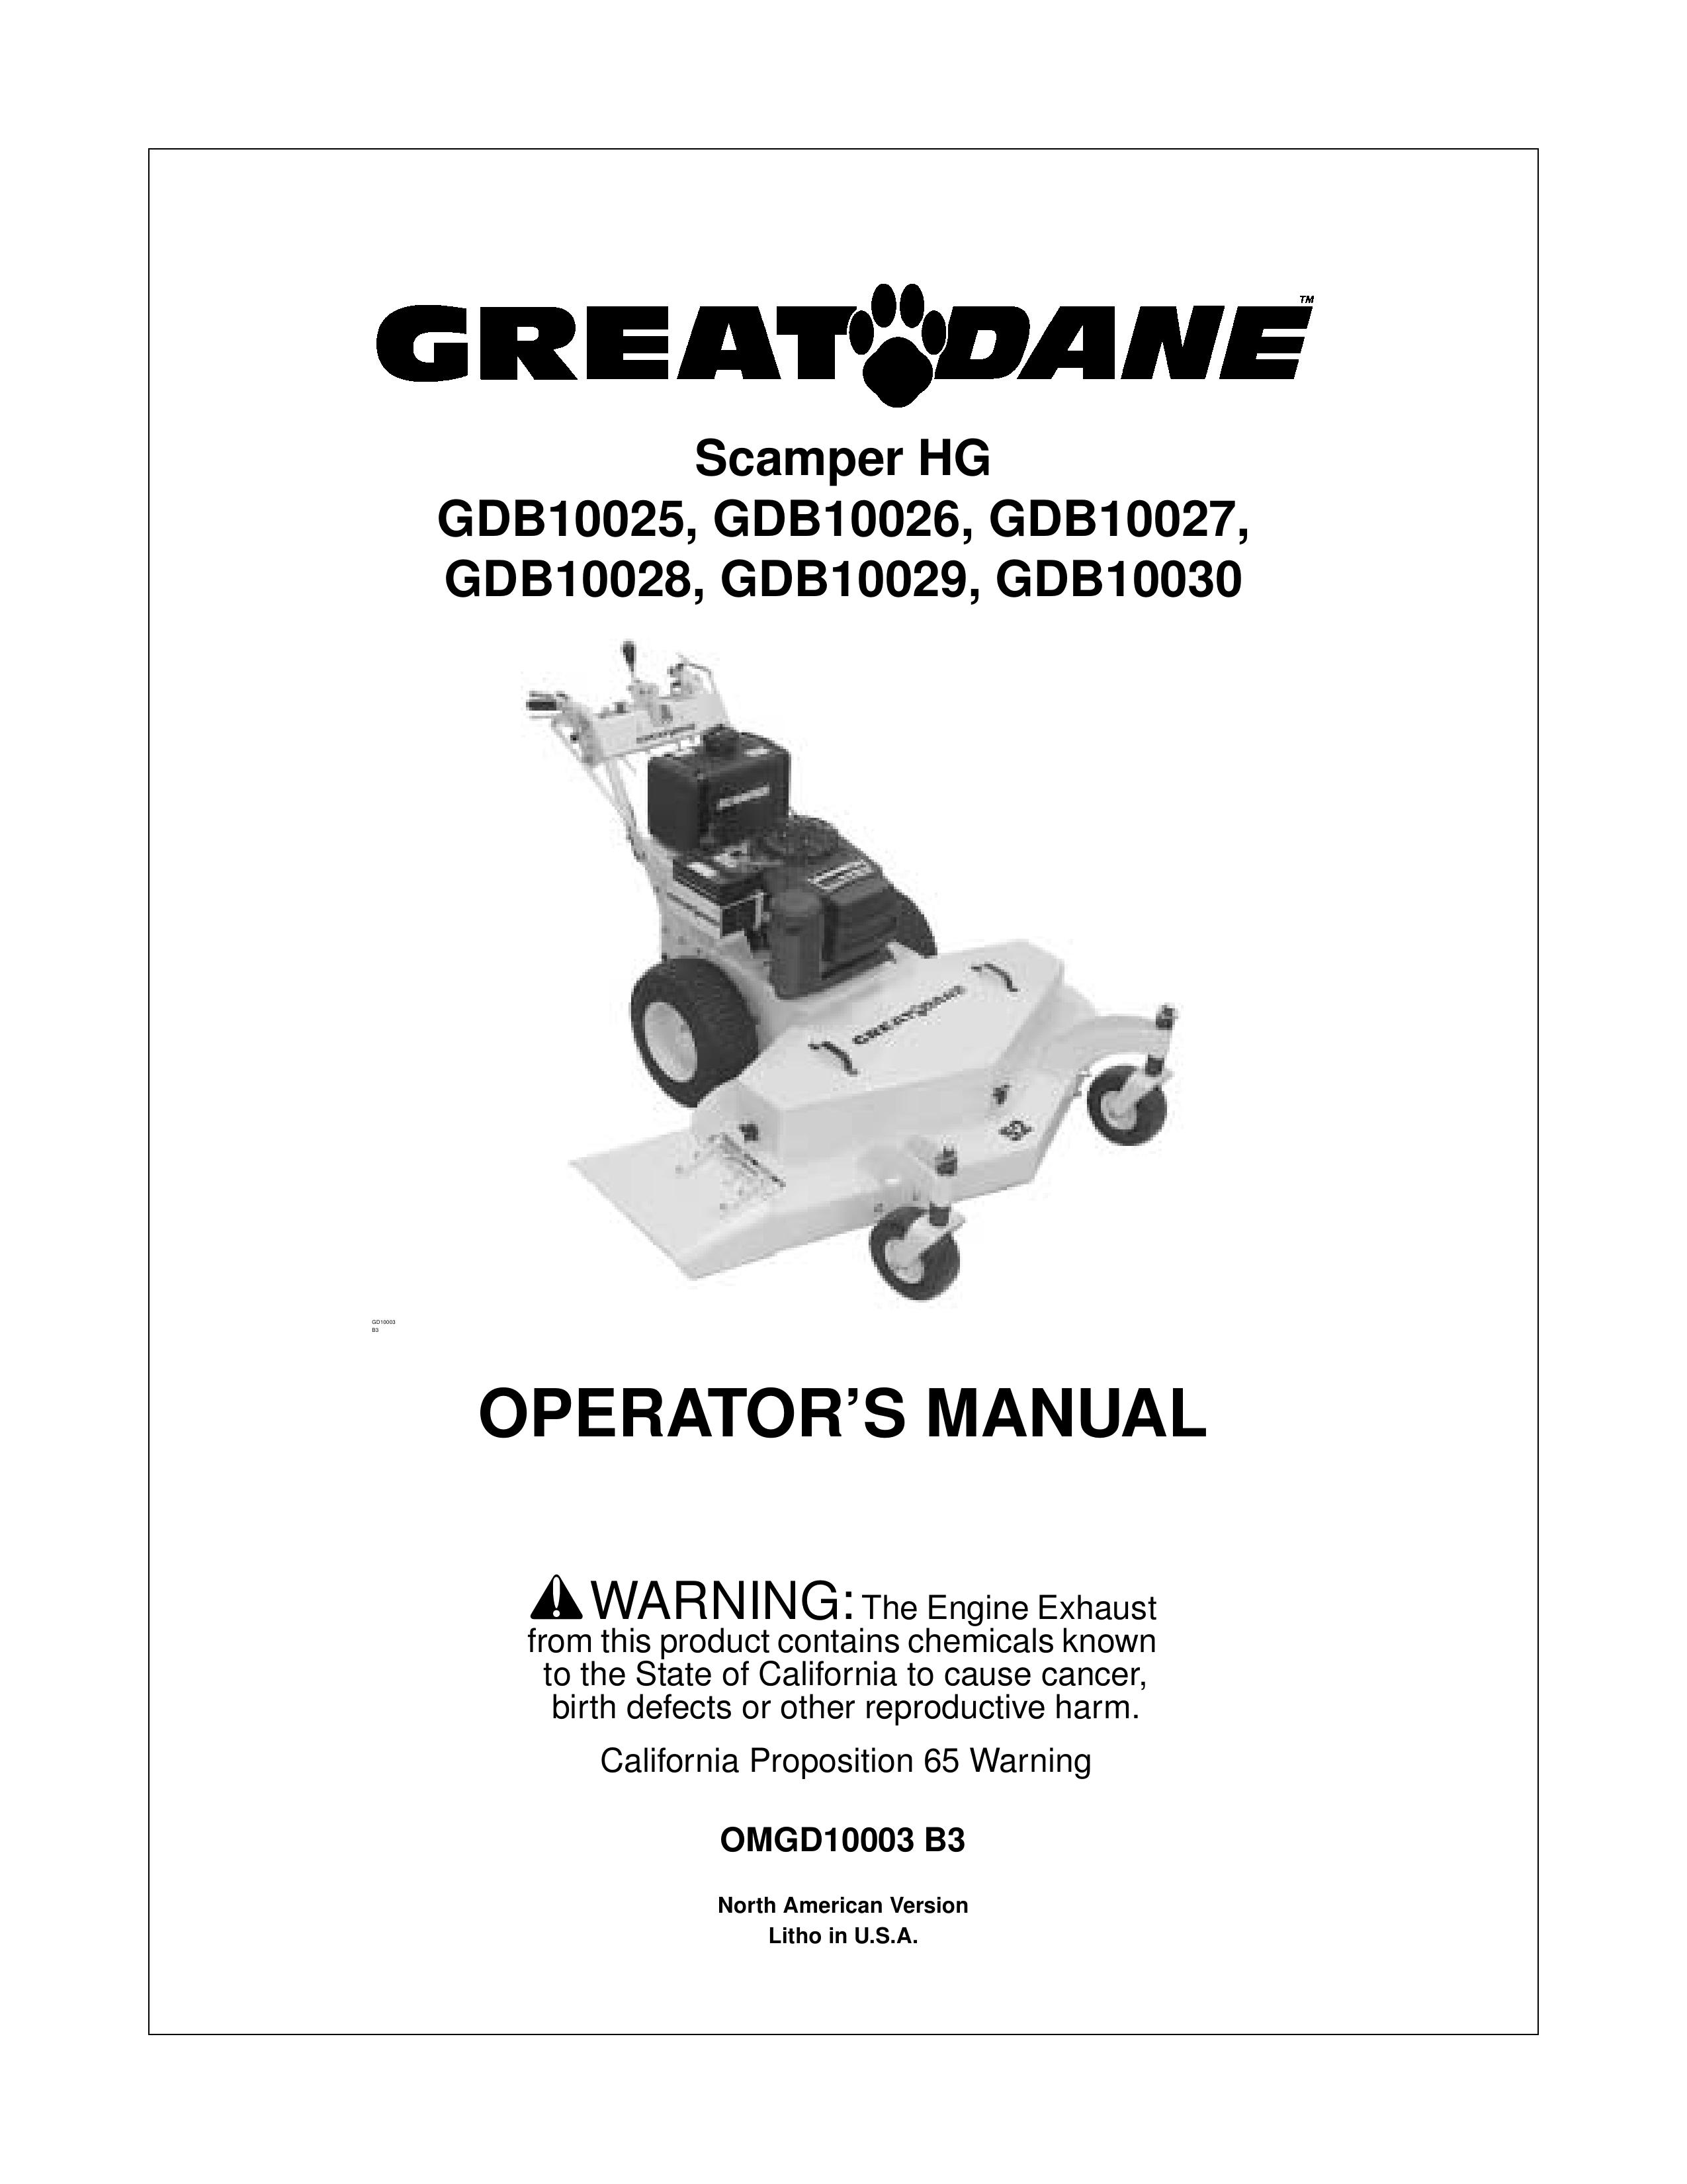 Great Dane GDB10026 Lawn Mower User Manual